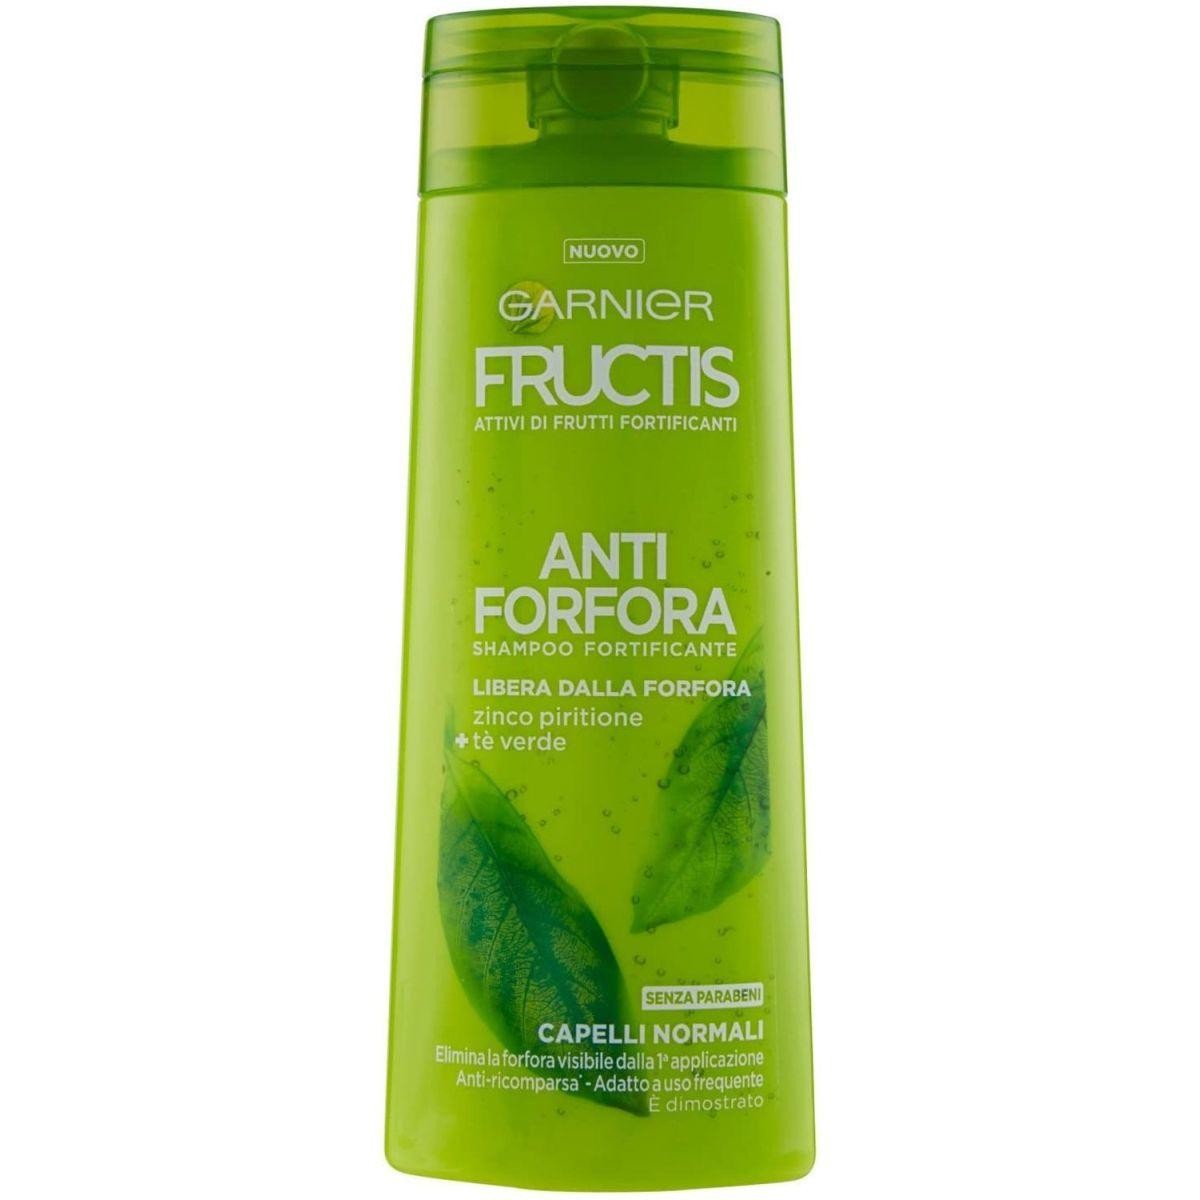 Garnier Fructis Shampoo per capelli Antiforfora, 250 ml